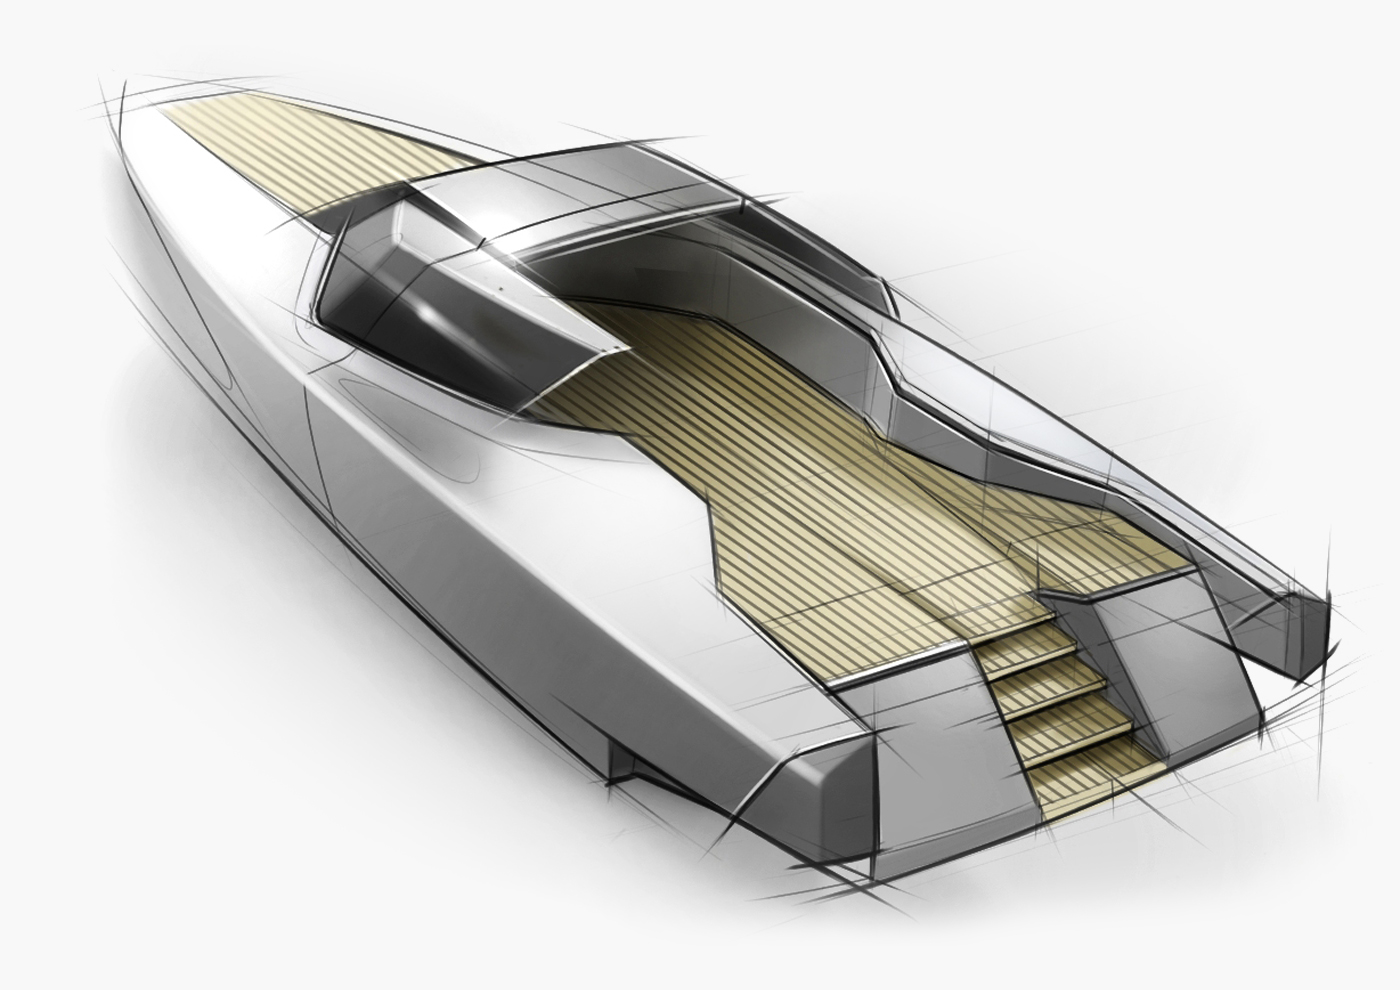 Yacht design - 90 Feet - Power boat - Concept sketch3 - Davide Mezzasalma - Furniture design - Berlin